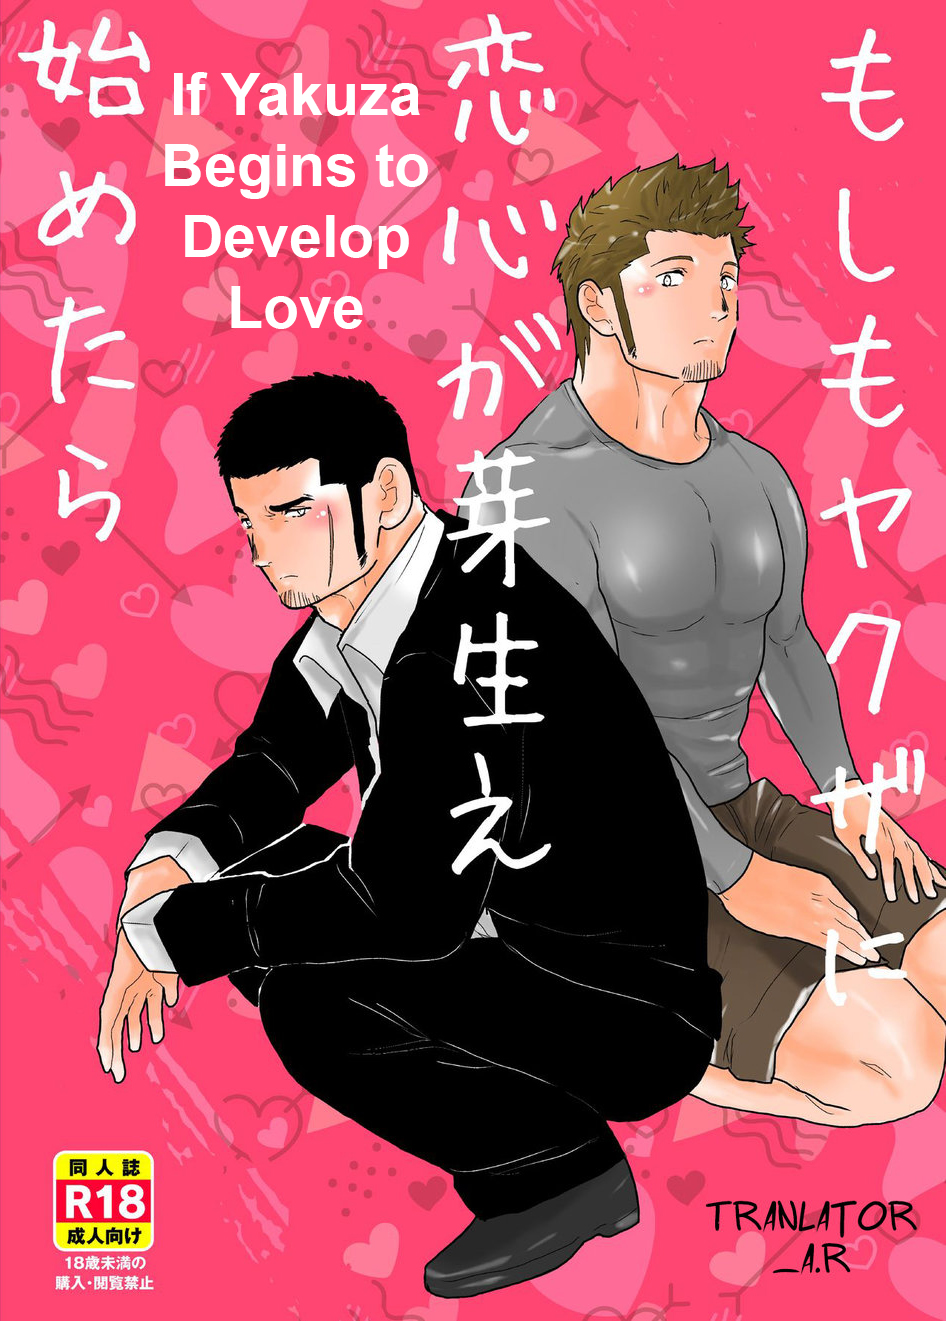 Yamome ヤモメ Sorairo Panda 空色パソダ If Yakuza Begins to Develop Love